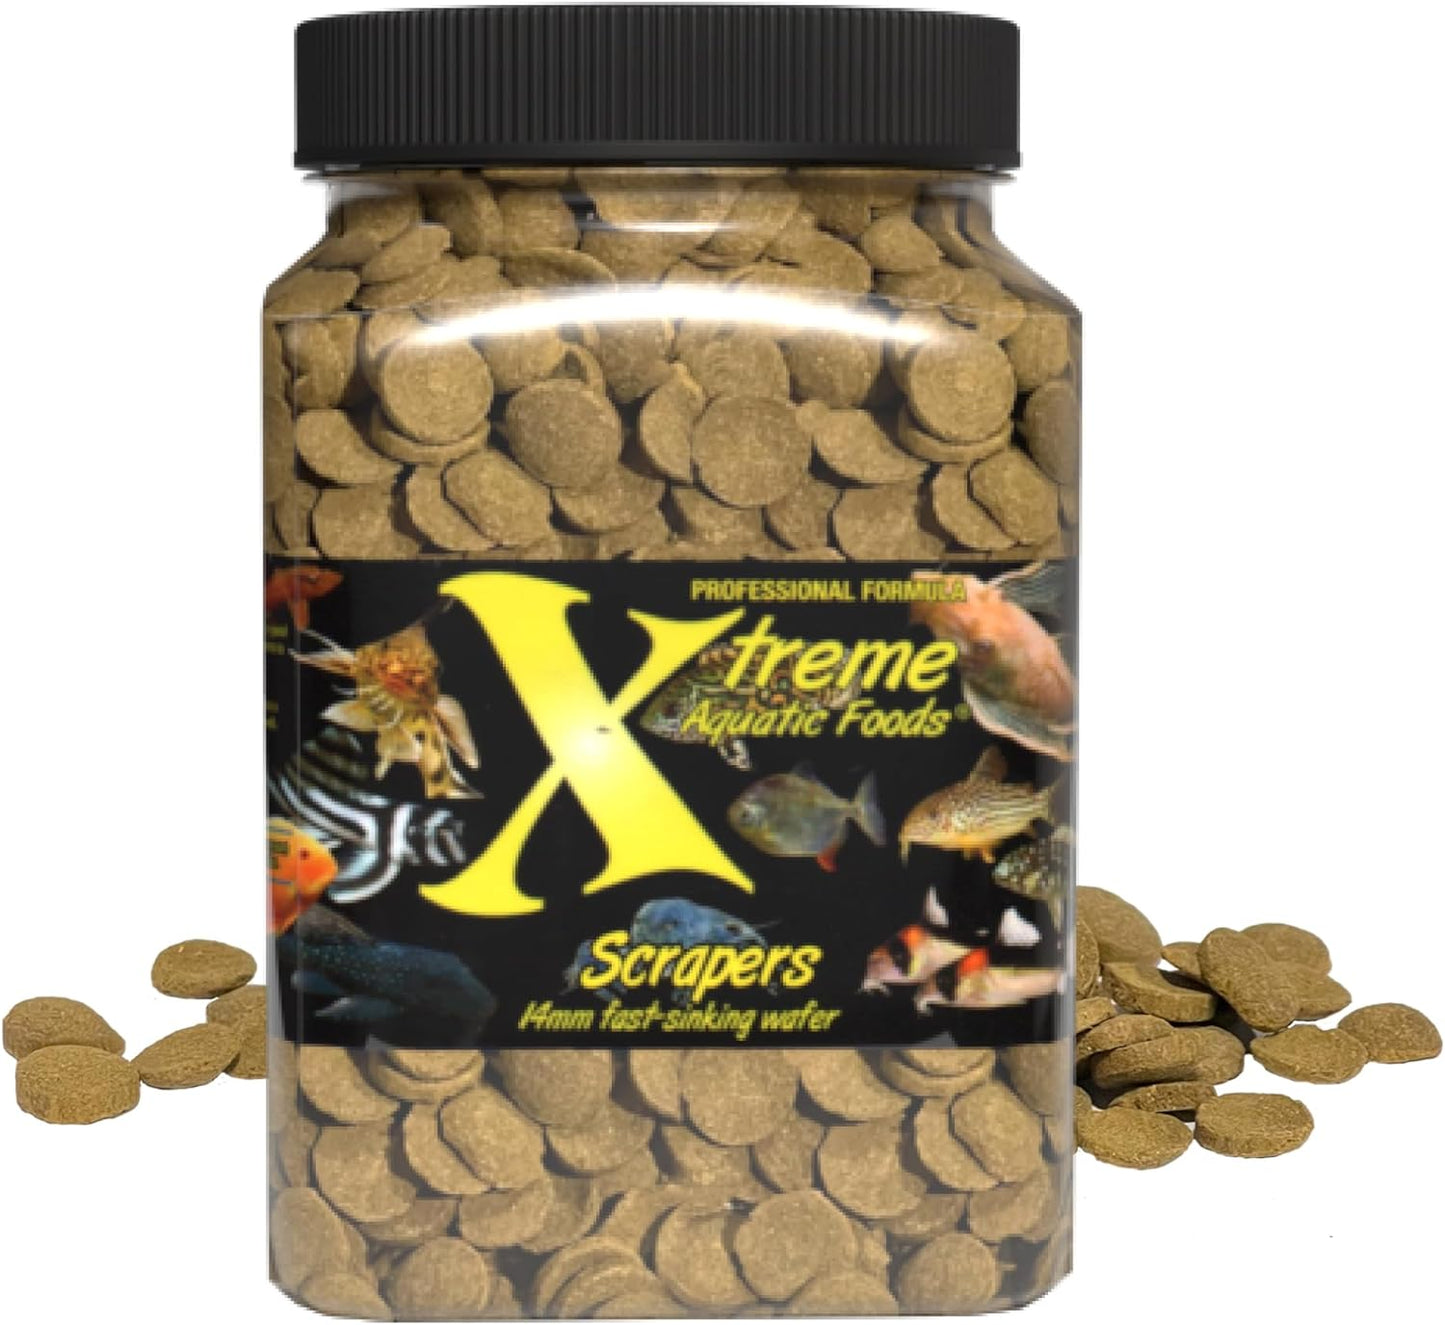 Xtreme Aquatic Foods Scrapers Premium 14mm Fast-Sinking Wafers 18 oz (504g) 867301000340 Super Cichlids